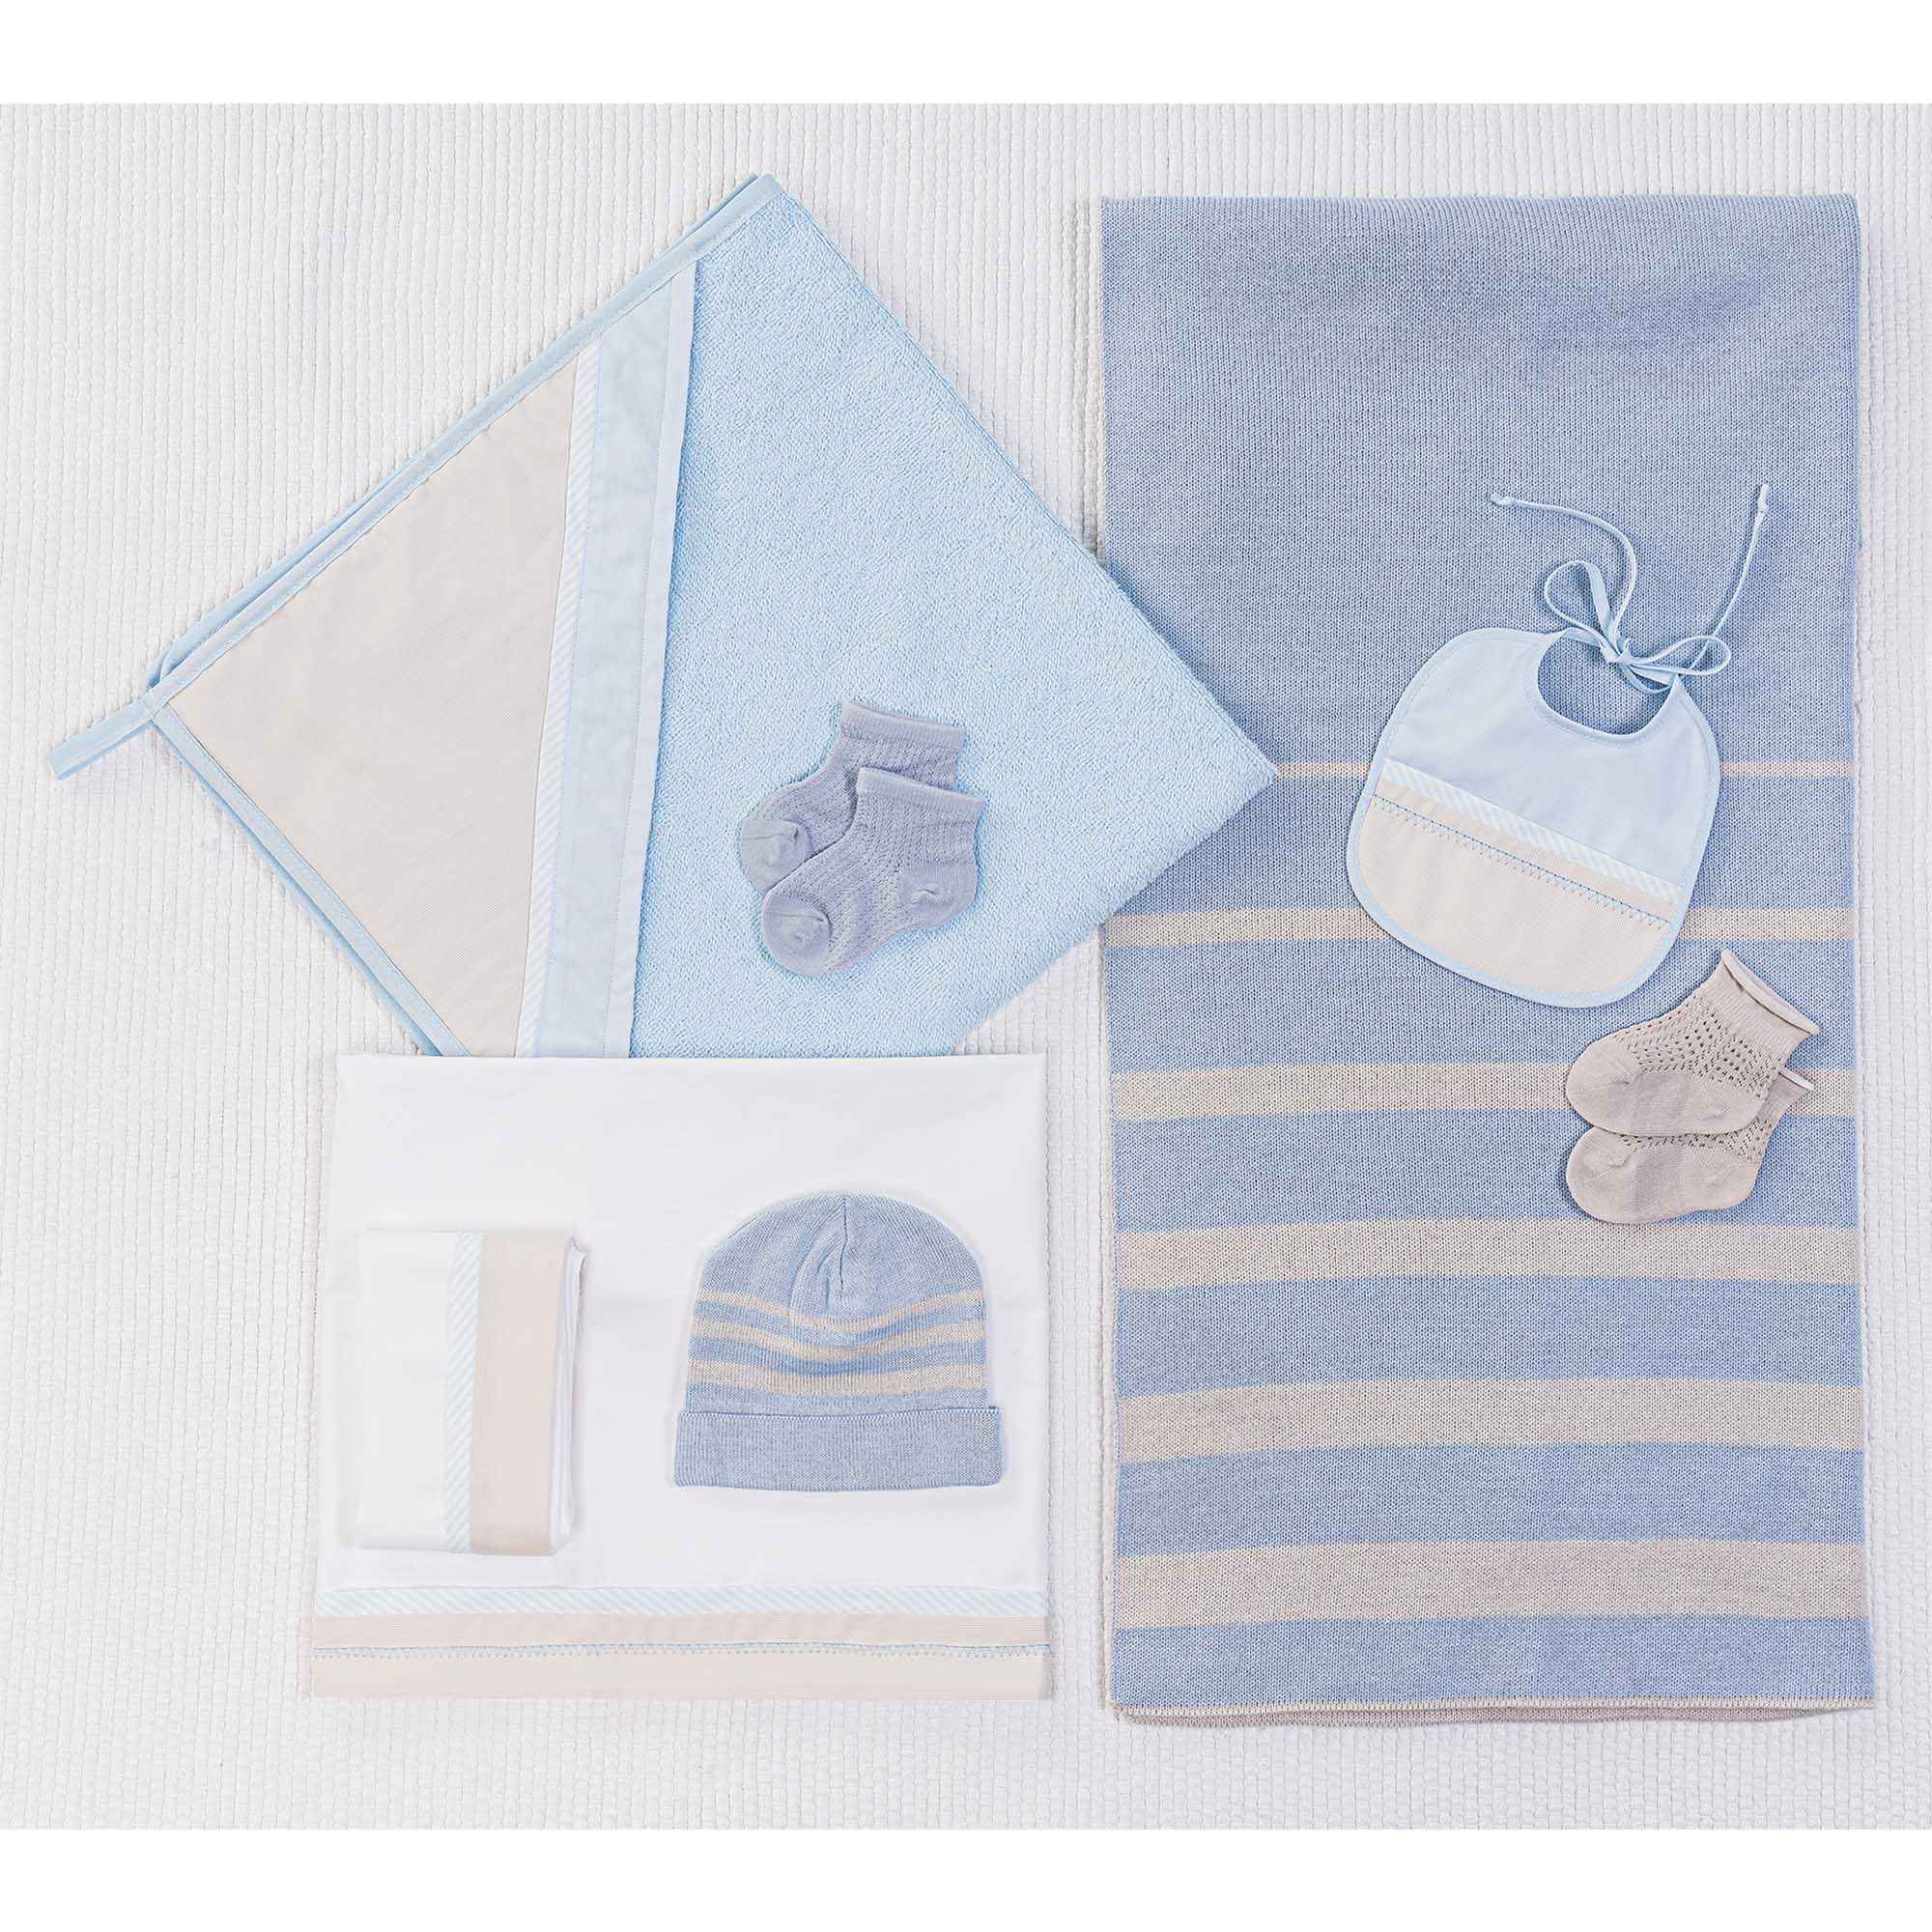 Baby Blue Stripe Wool Blanket | Lush nursery fabrics 